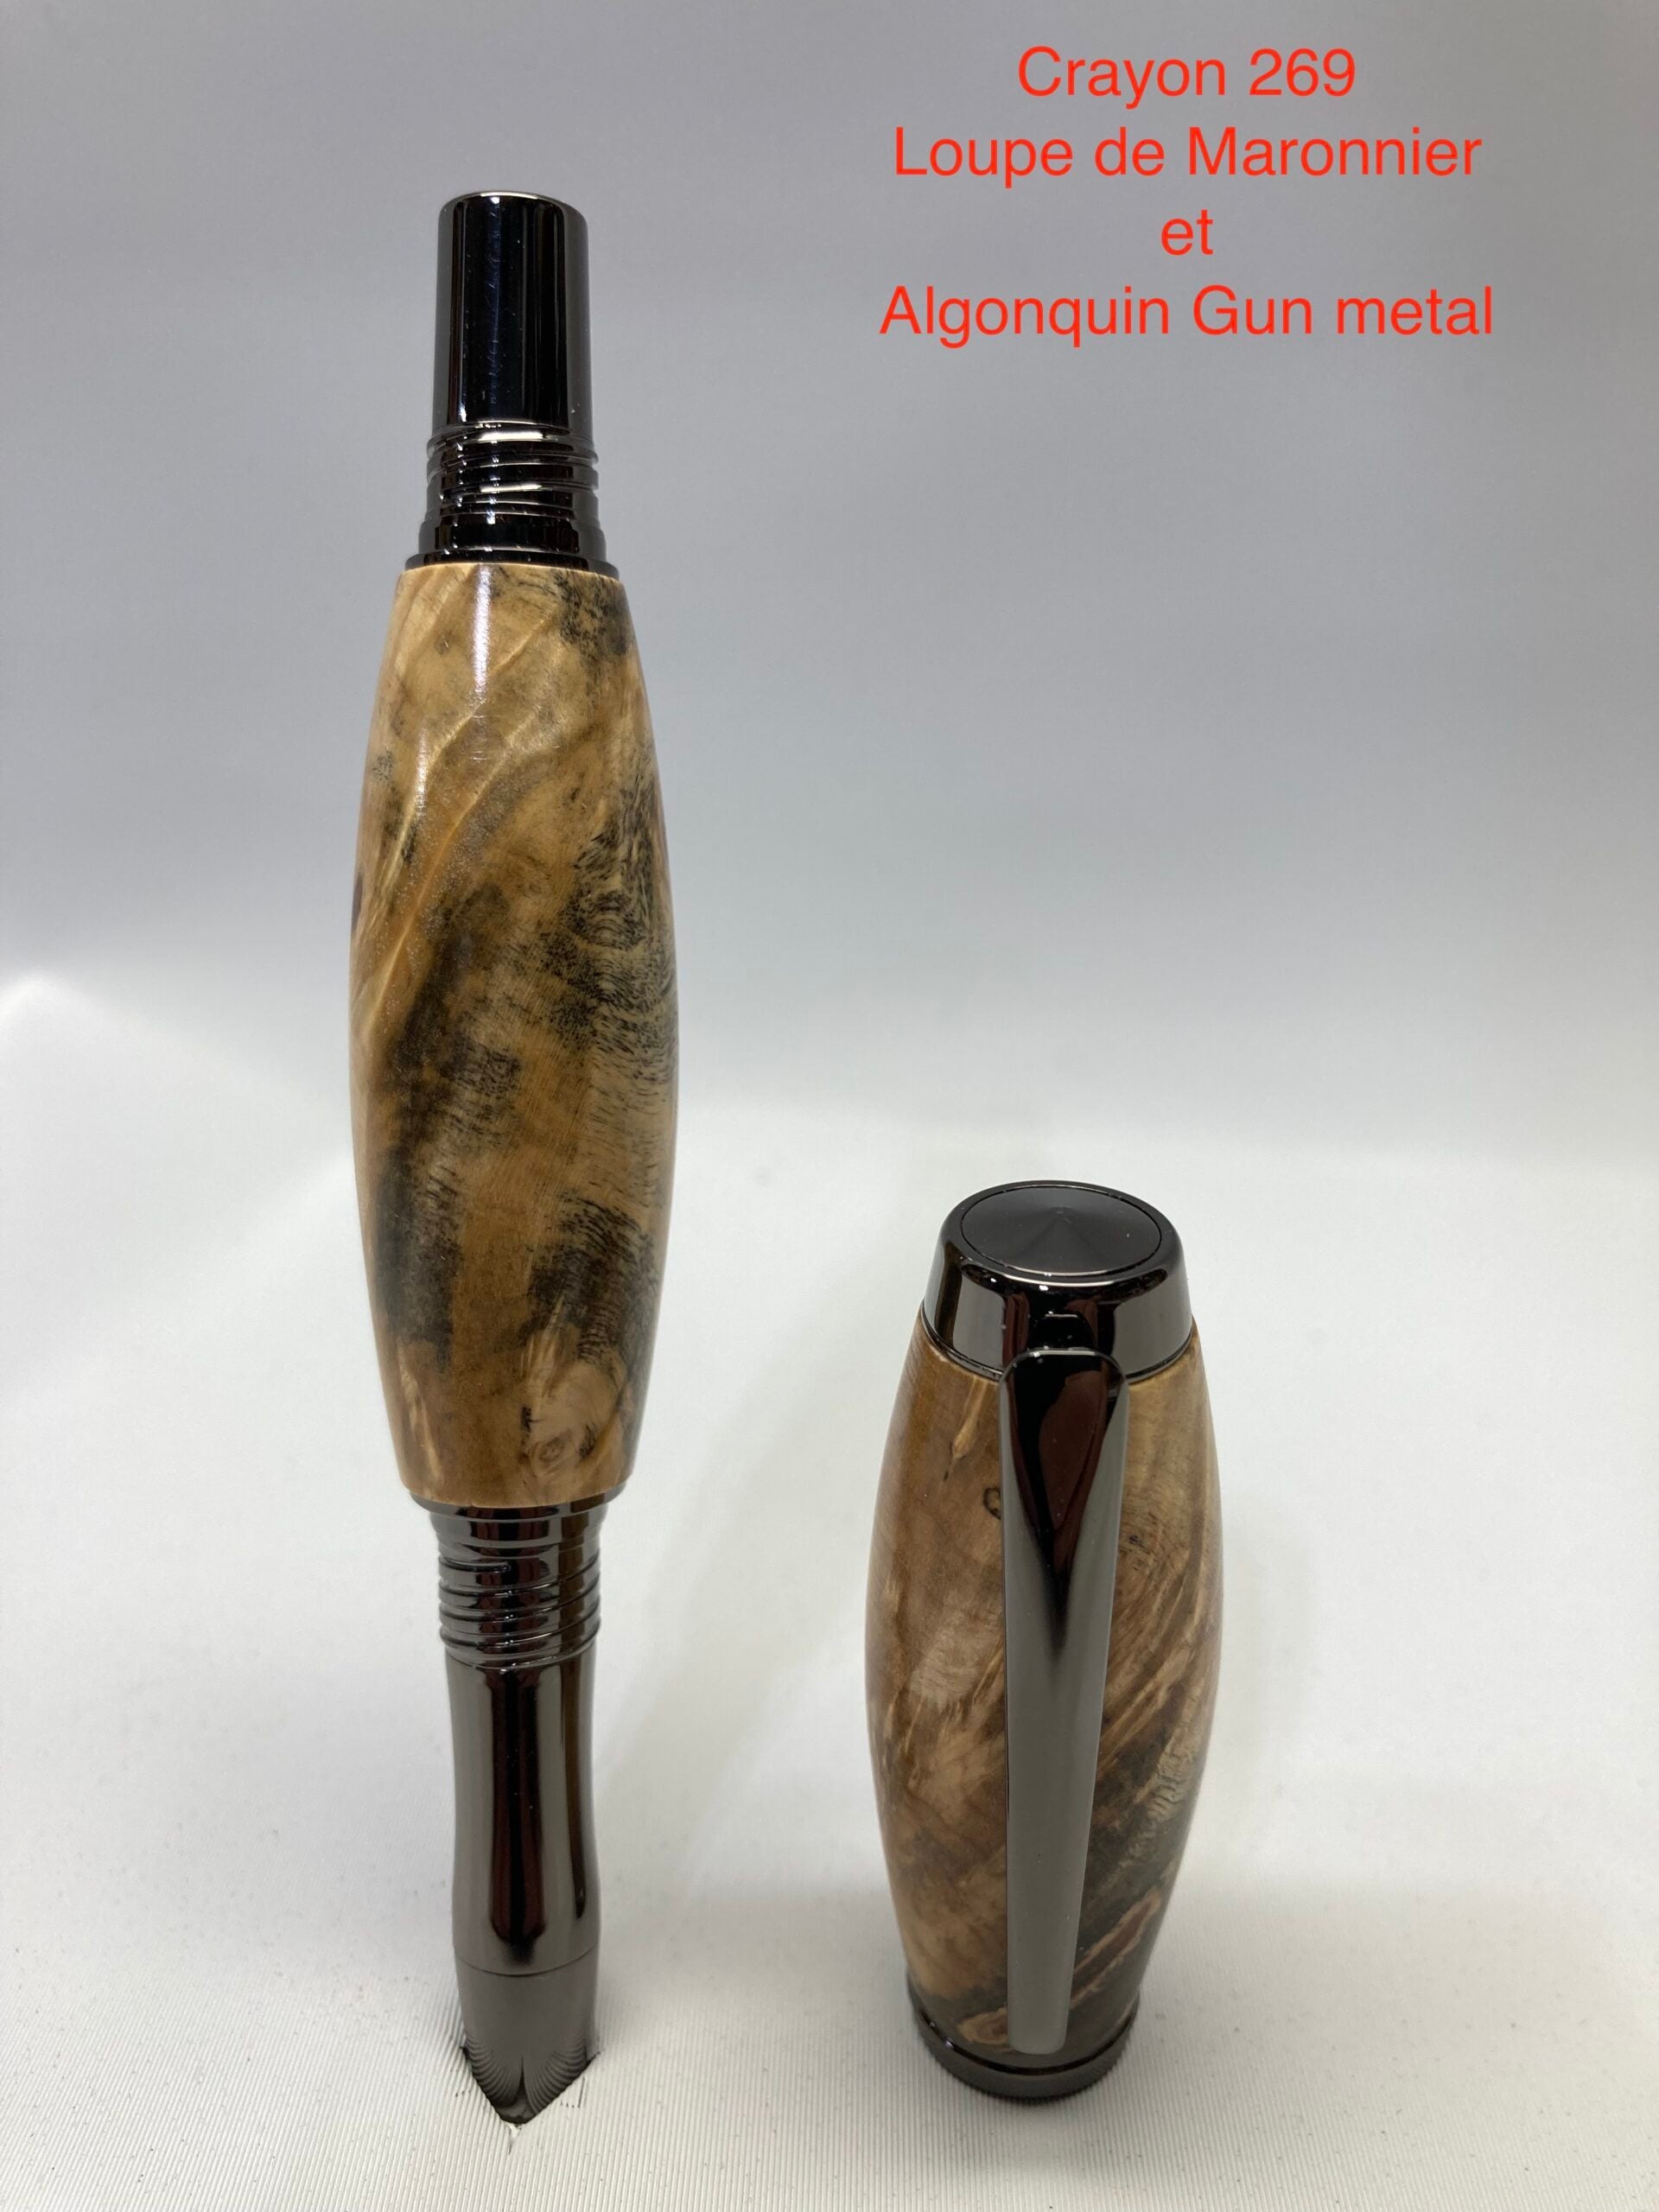 Algonquin, chestnut burl and gun metal